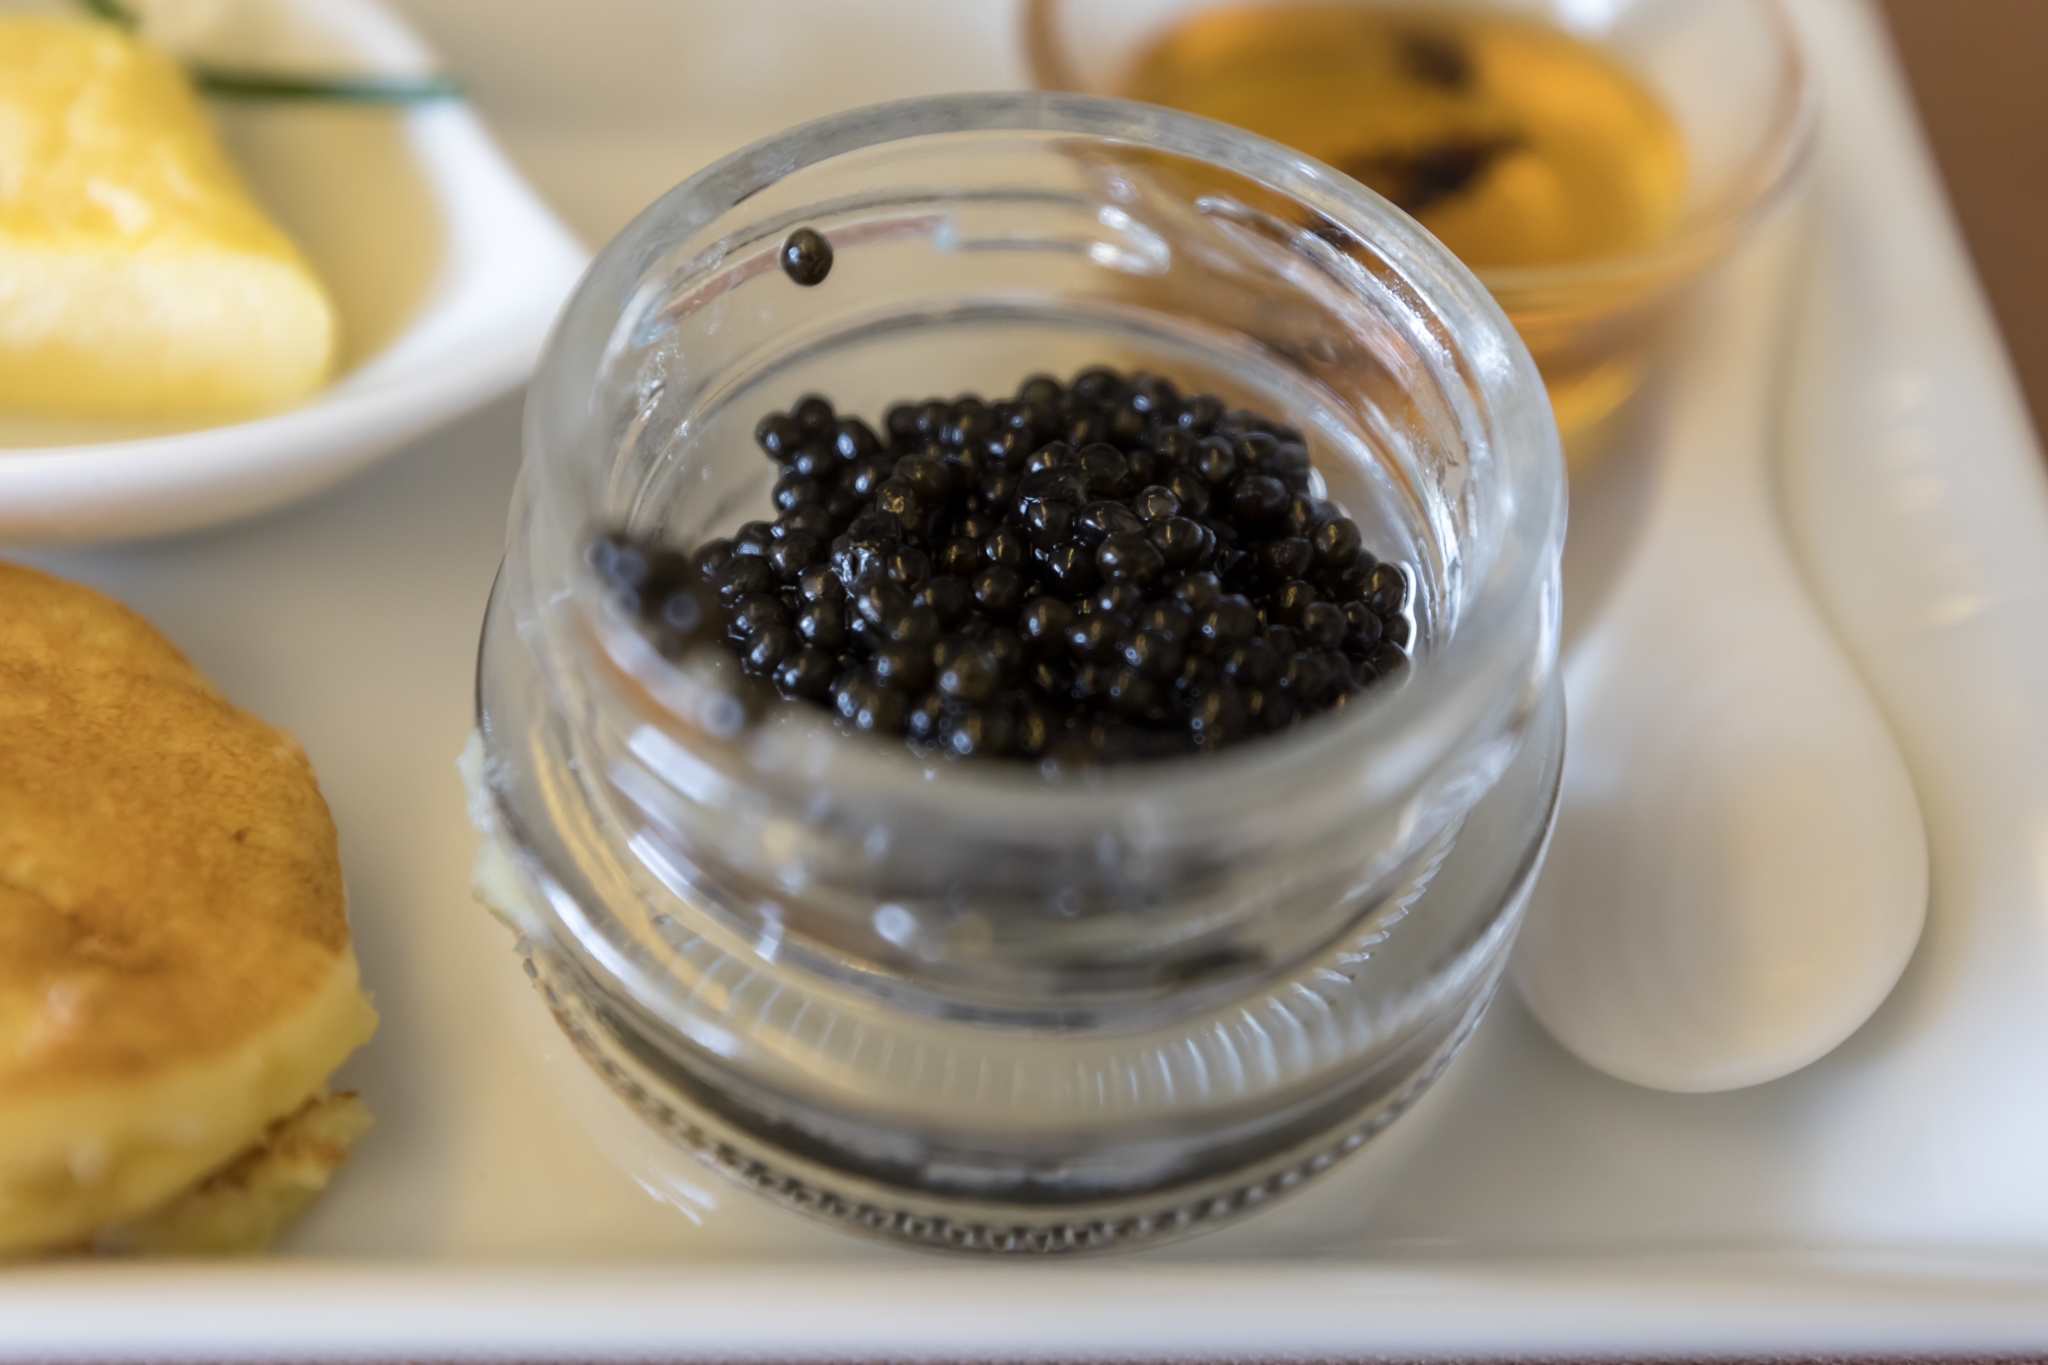 a glass jar with black caviar inside